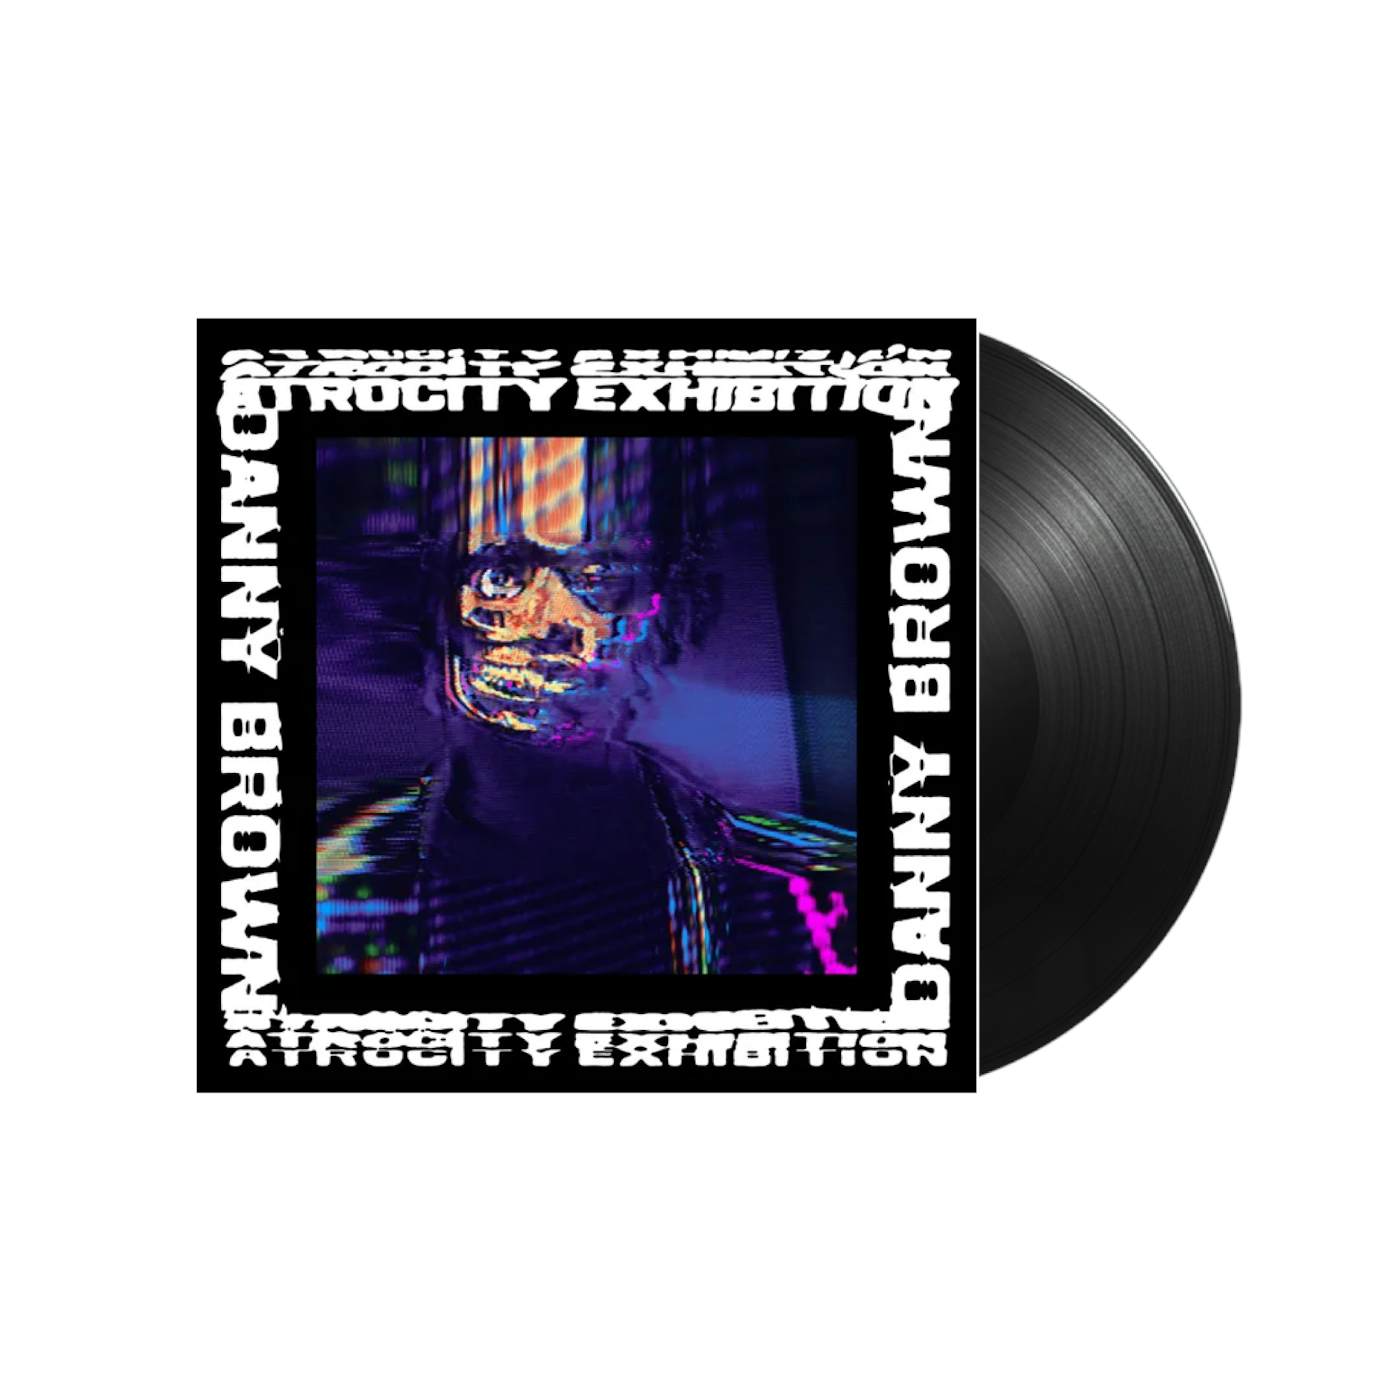 samtale Ekstremt vigtigt snemand Danny Brown / Atrocity Exhibition 2xLP Vinyl